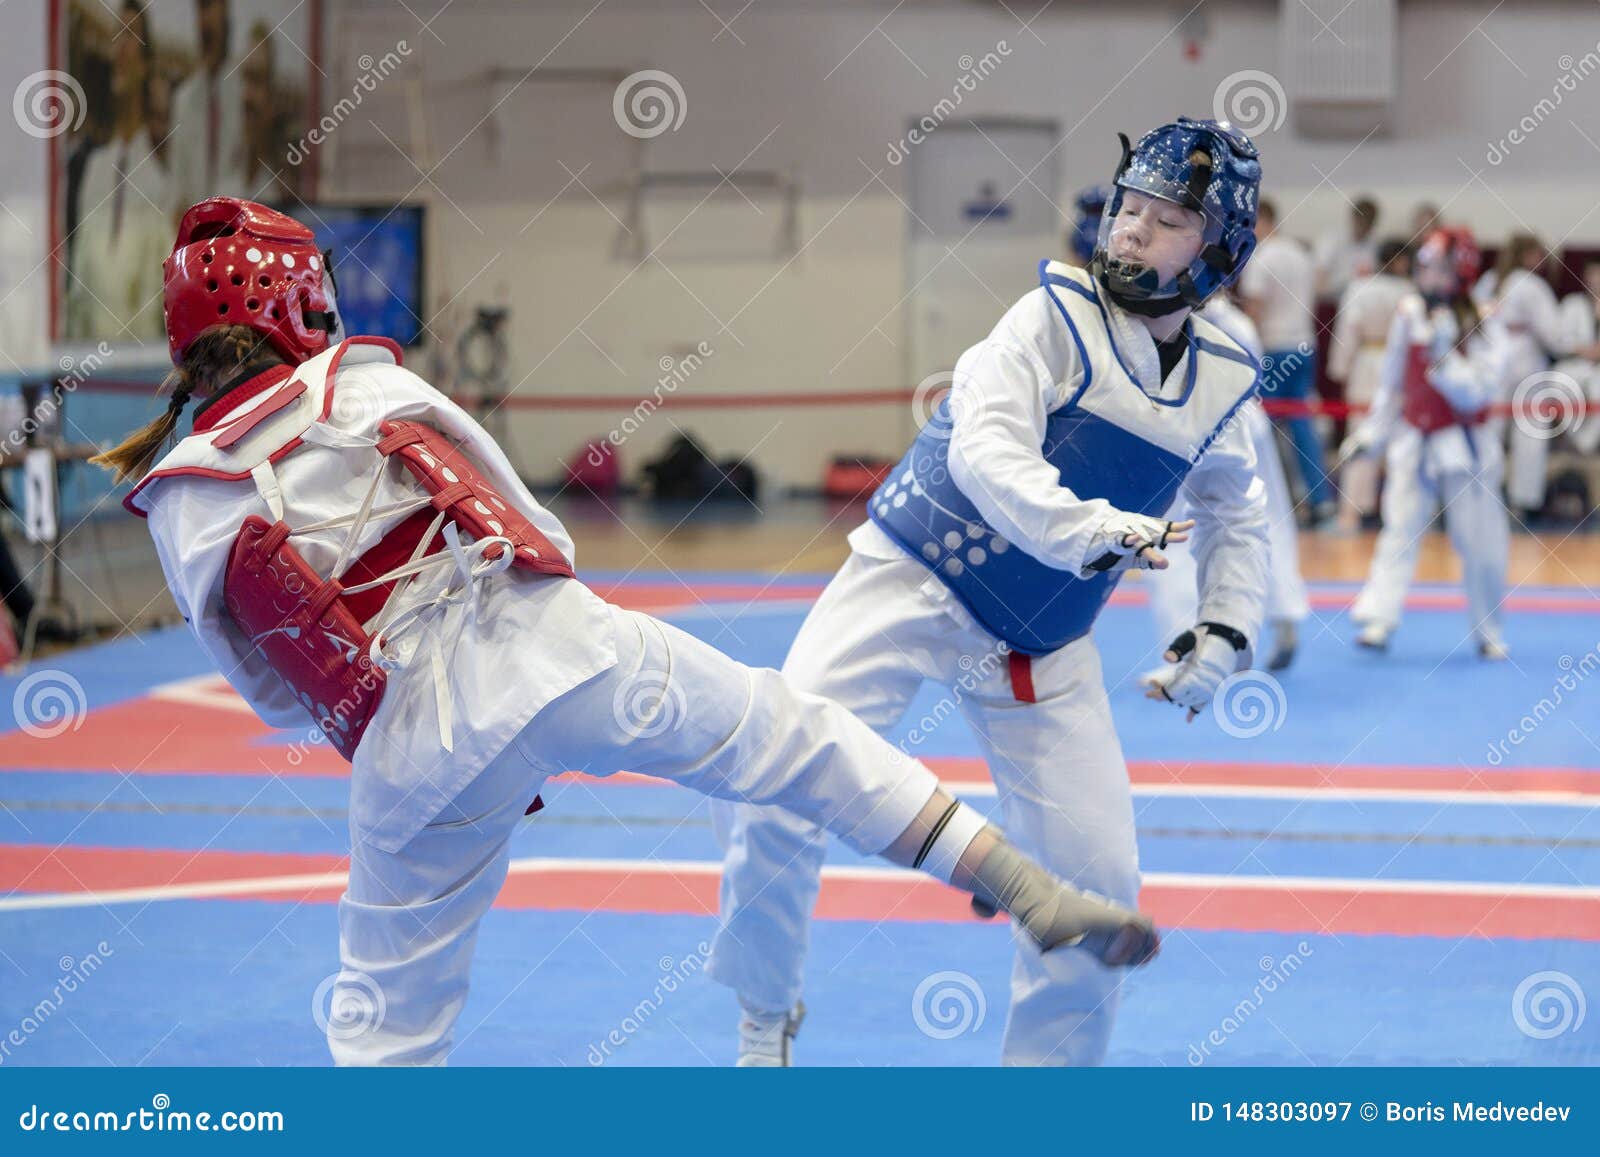 Adriana Taekwondo Blue Hair Training - wide 8